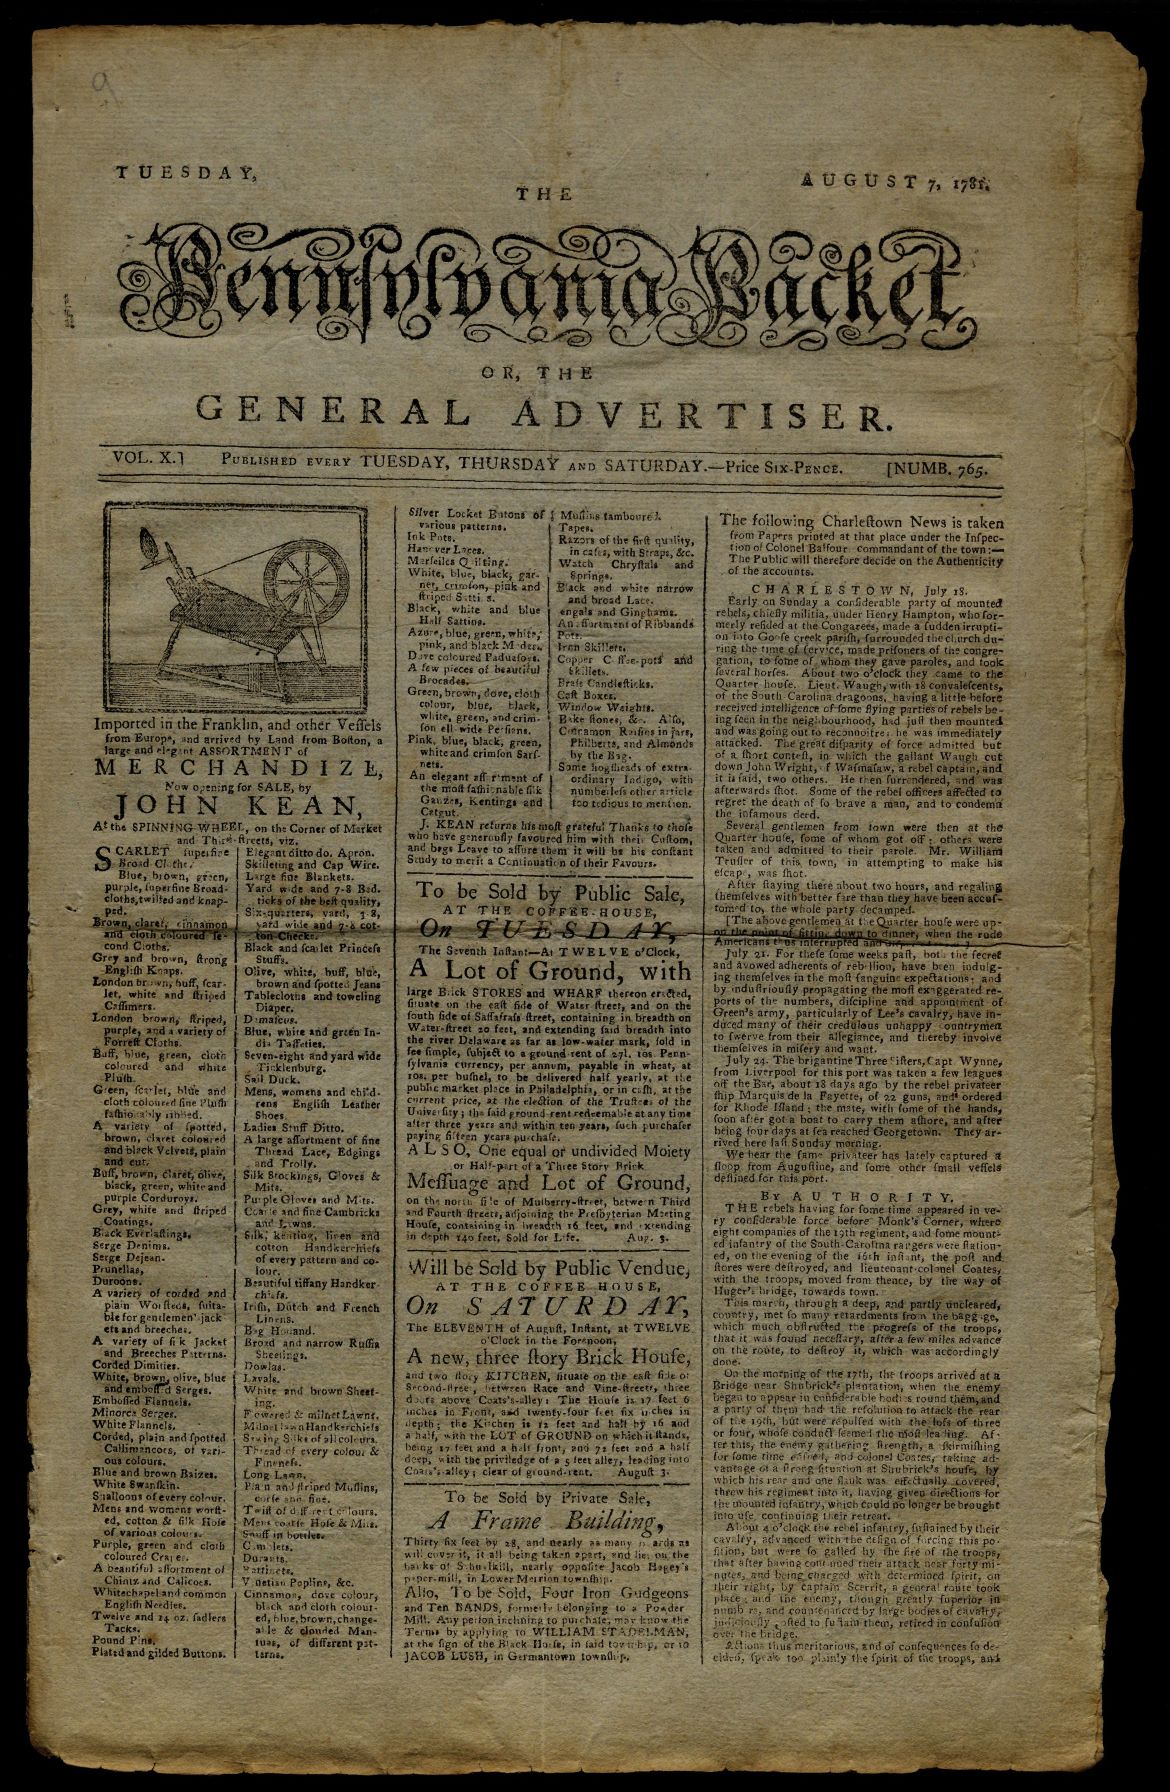 Pennsylvania Packet or, The General Advertiser, August 7, 1781 (The Gilder Lehrman Institute, GLC03129)